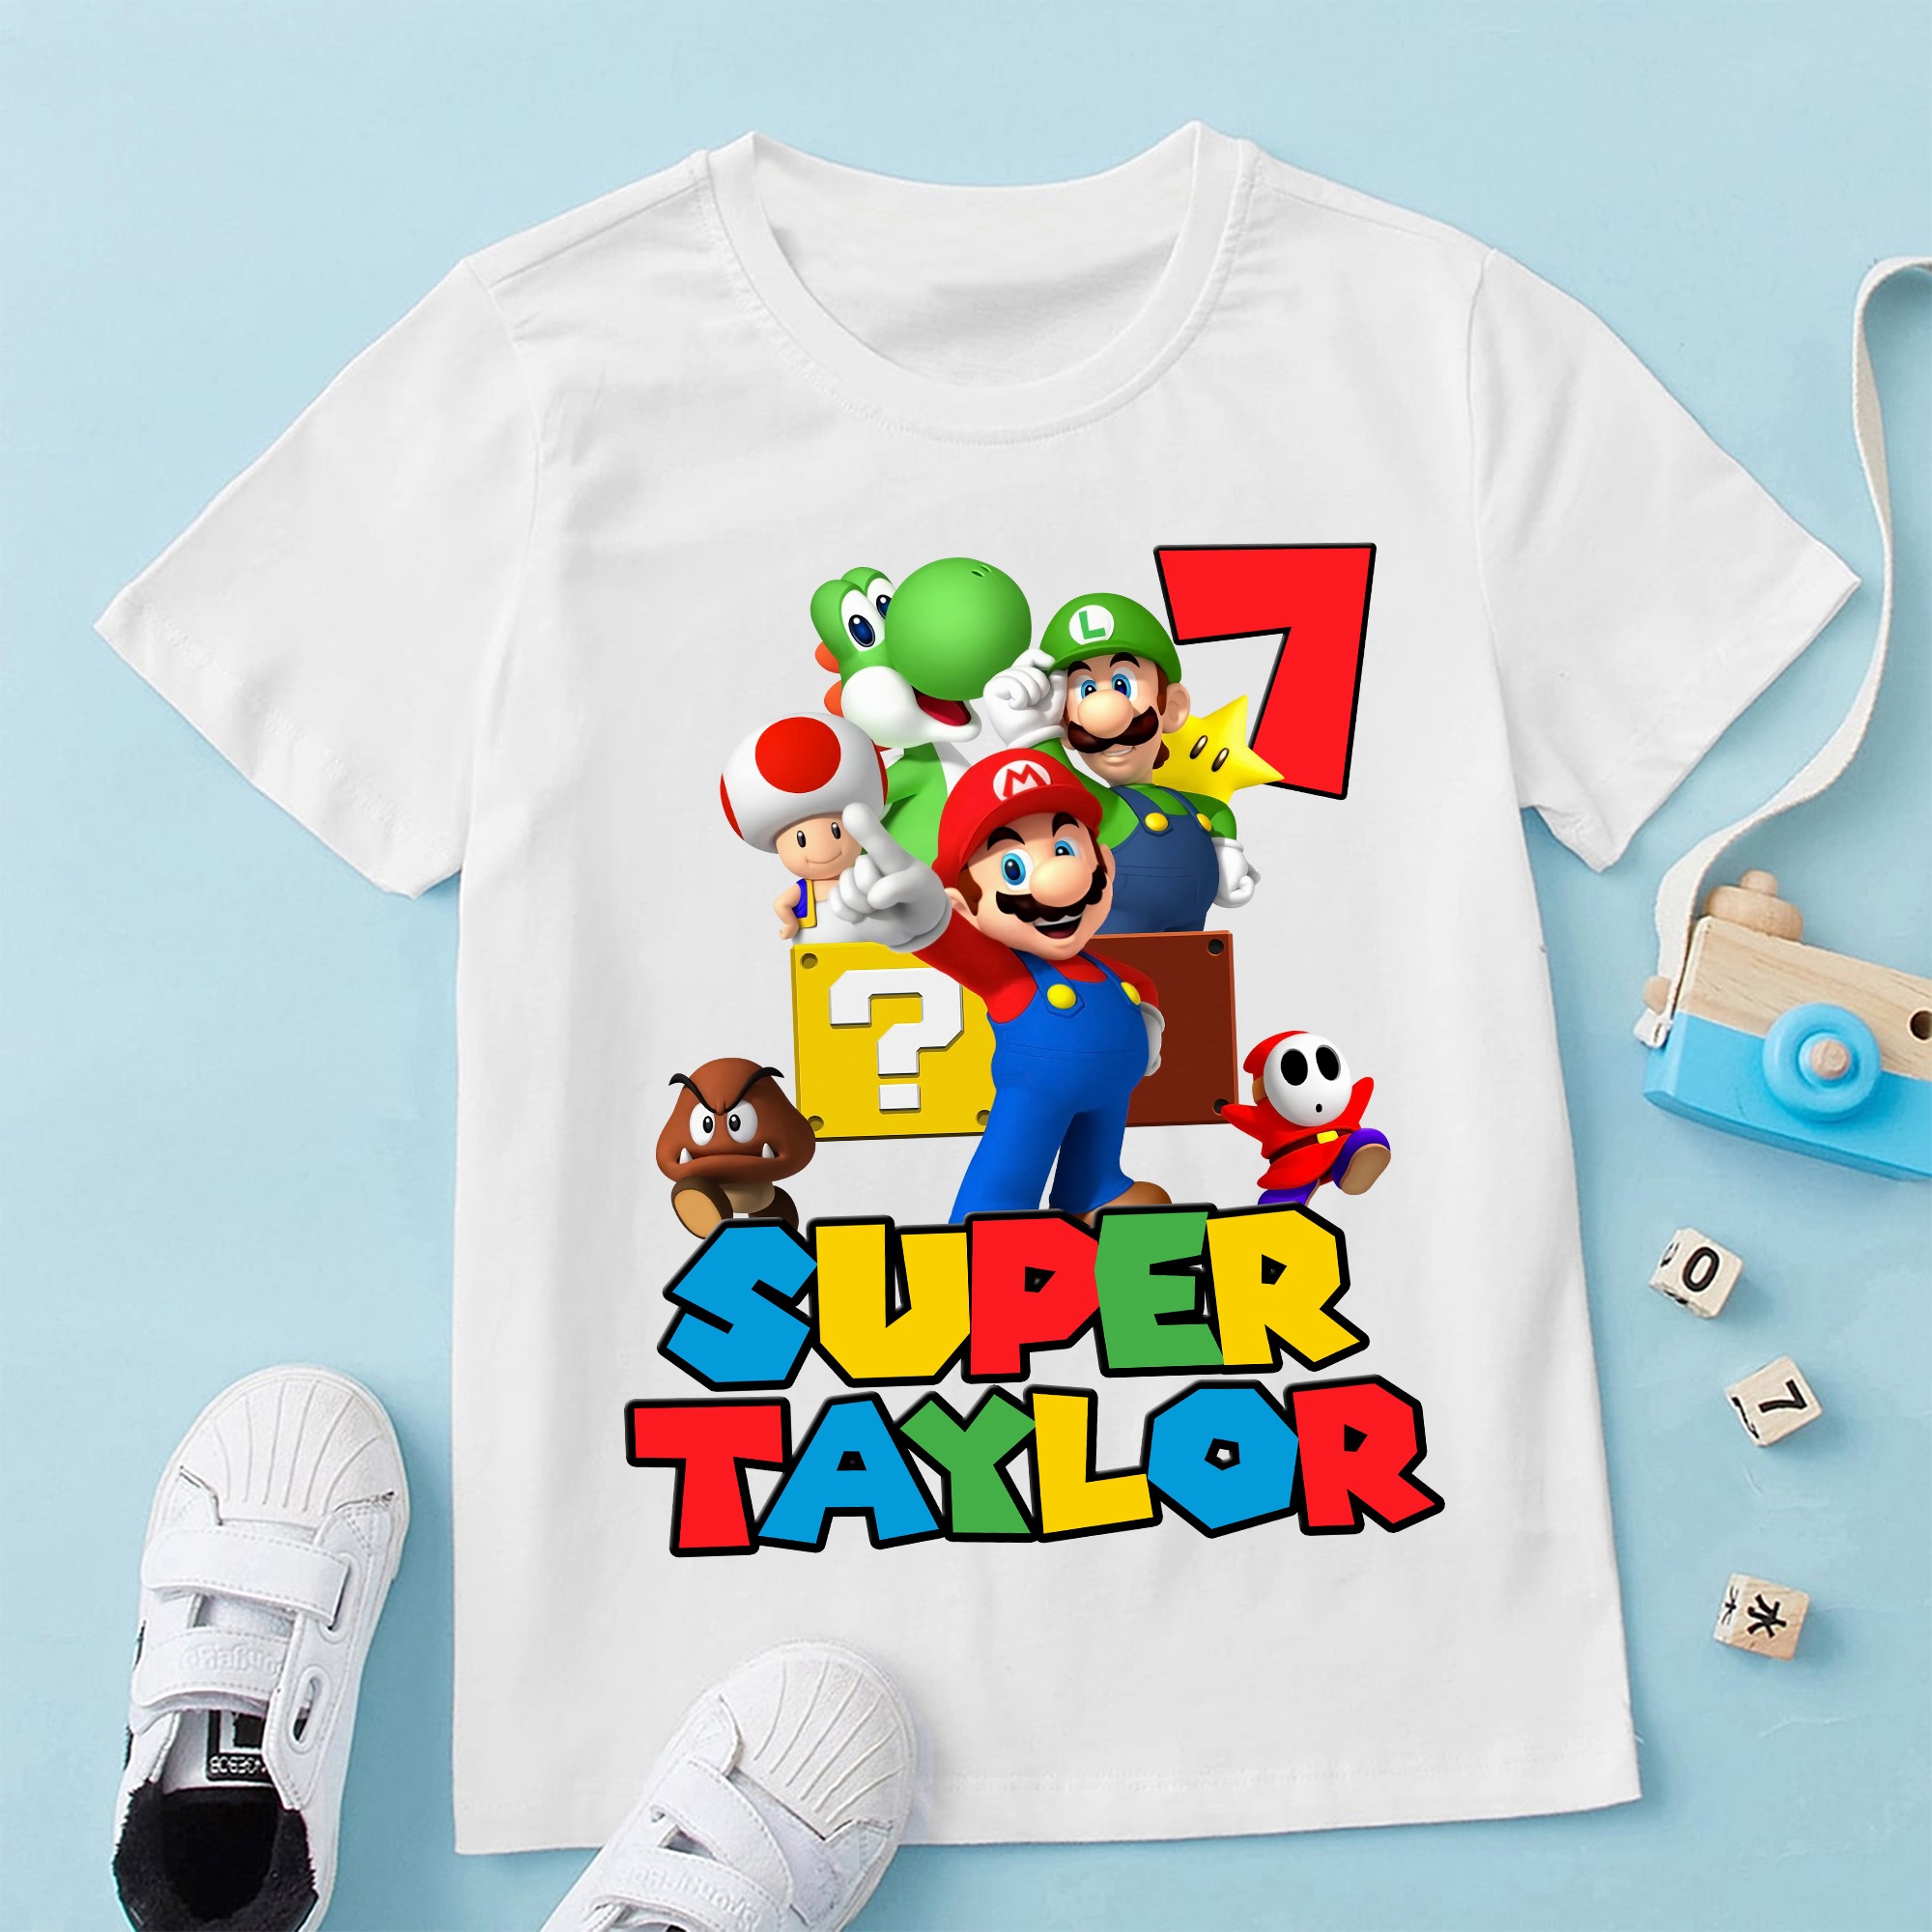 Personalized Super Mario Birthday Shirt Set Custom Super Mario Shirt Mario Personalized Shirt Super Mario Party Shirt Mario Kids Birthday Shirt